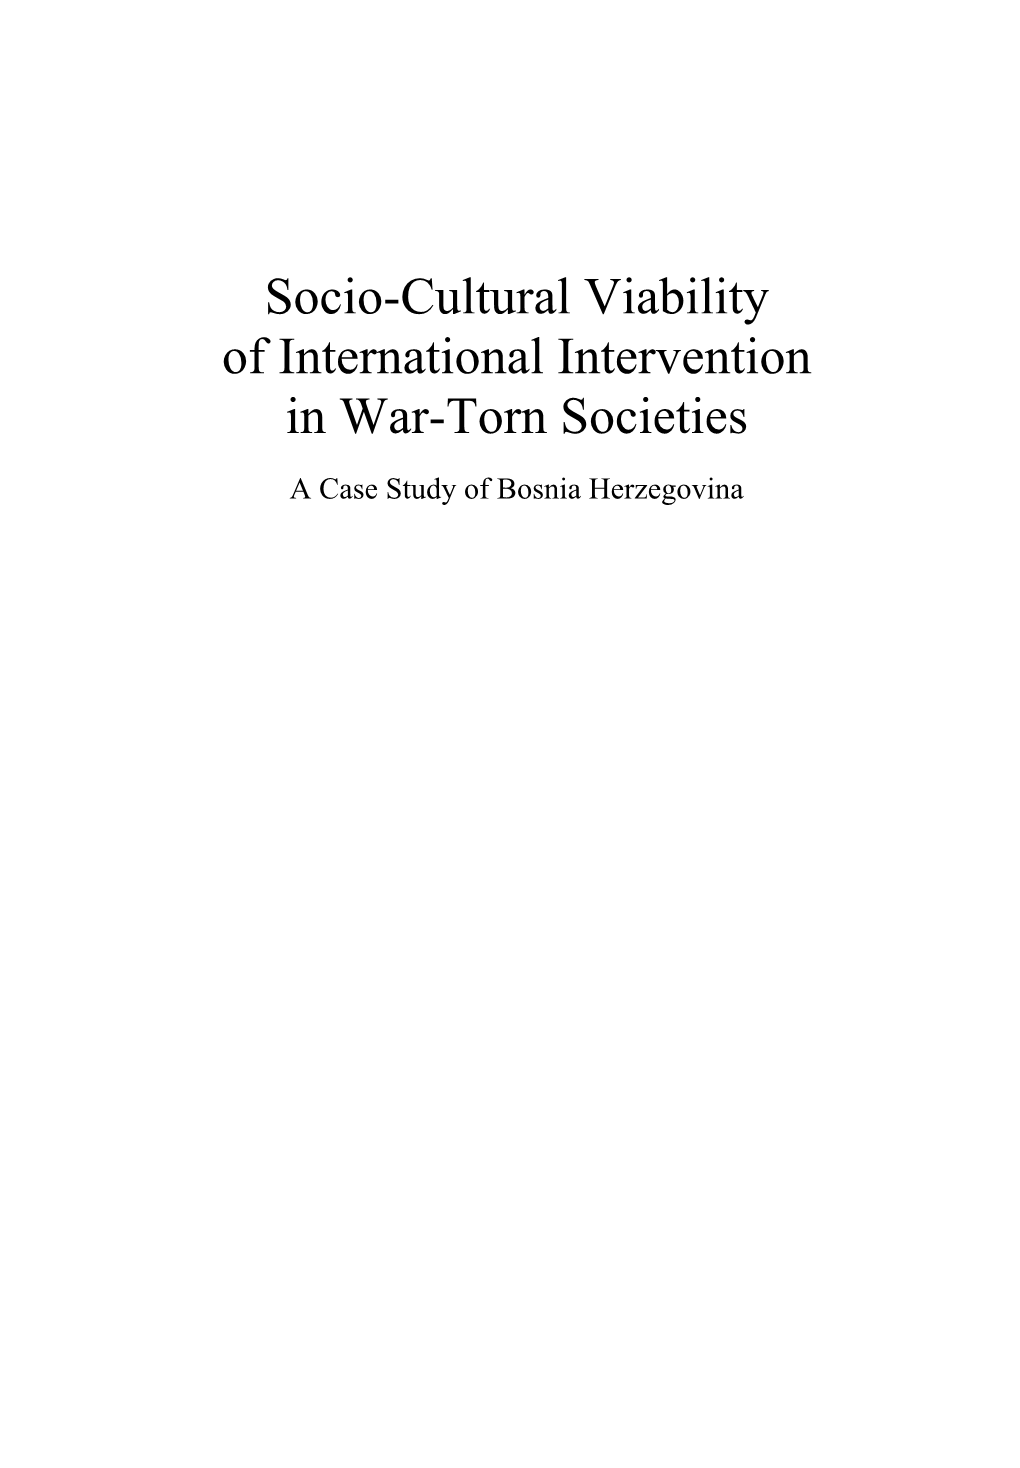 Socio-Cultural Viability of International Intervention in War-Torn Societies